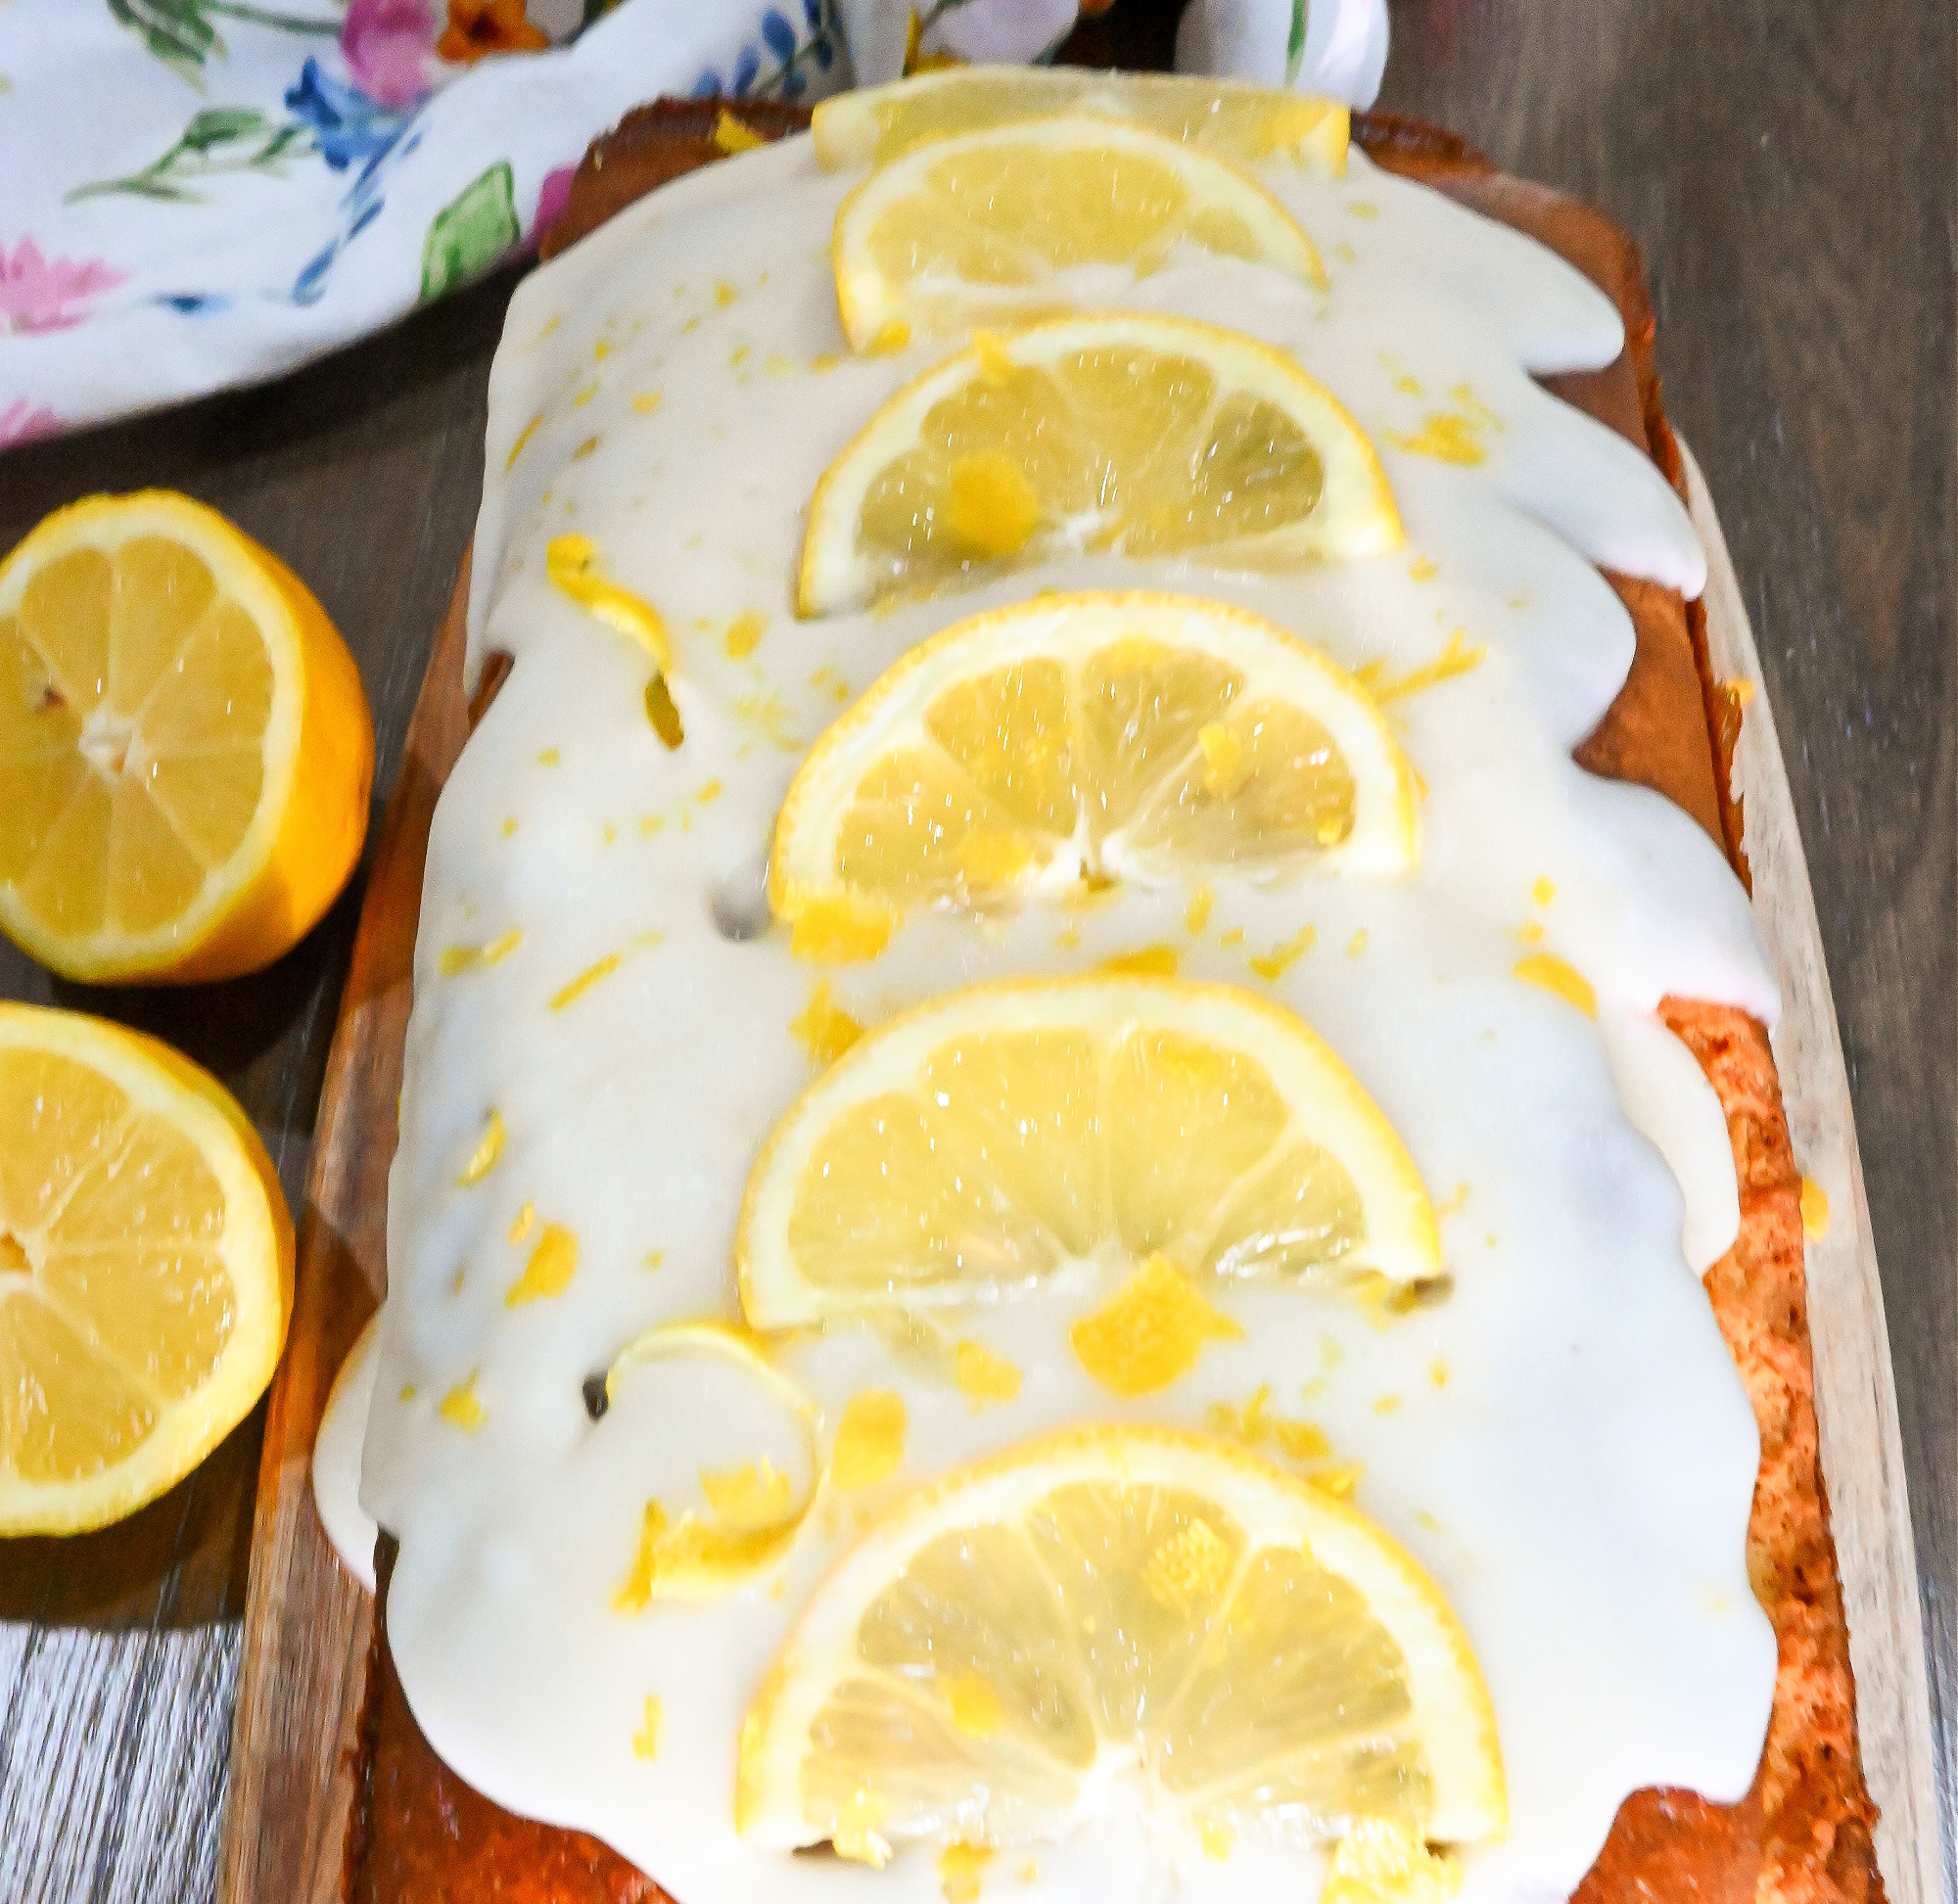 keto lemon cake with slices of lemon and lemon zest on top of lemon tangy icing